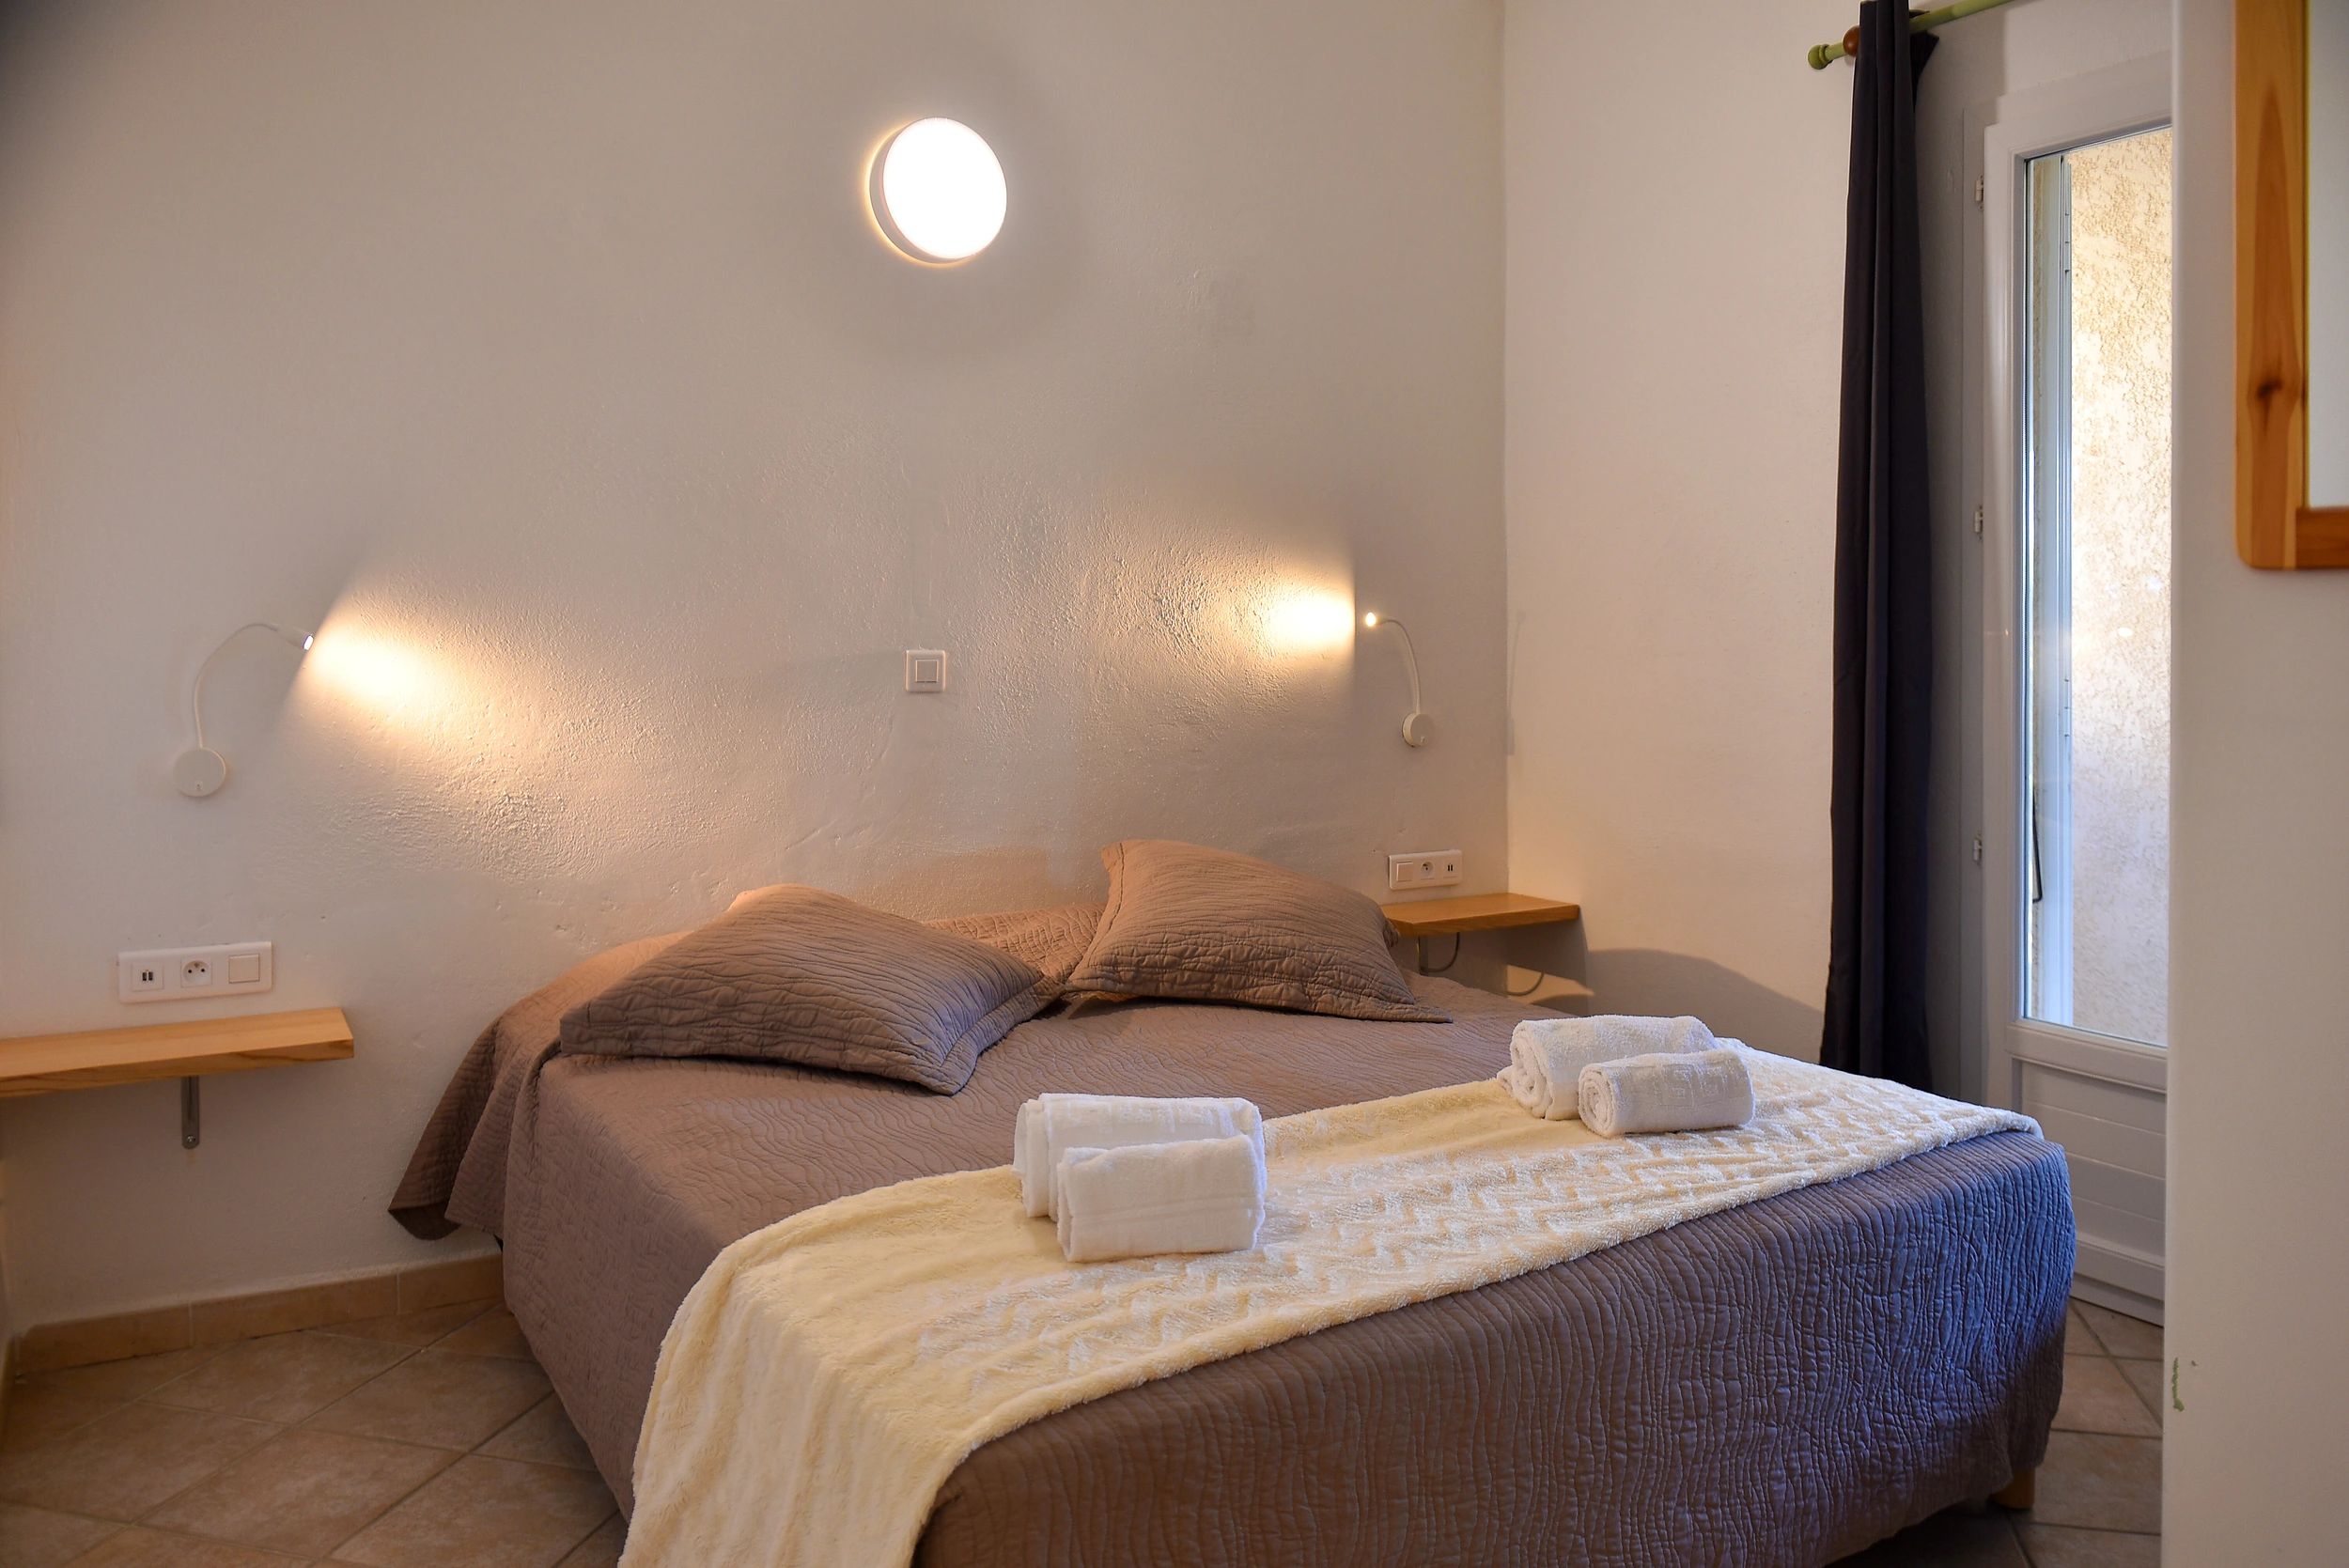 Luxury villa to rent in Porto-Vecchio with large bedroom